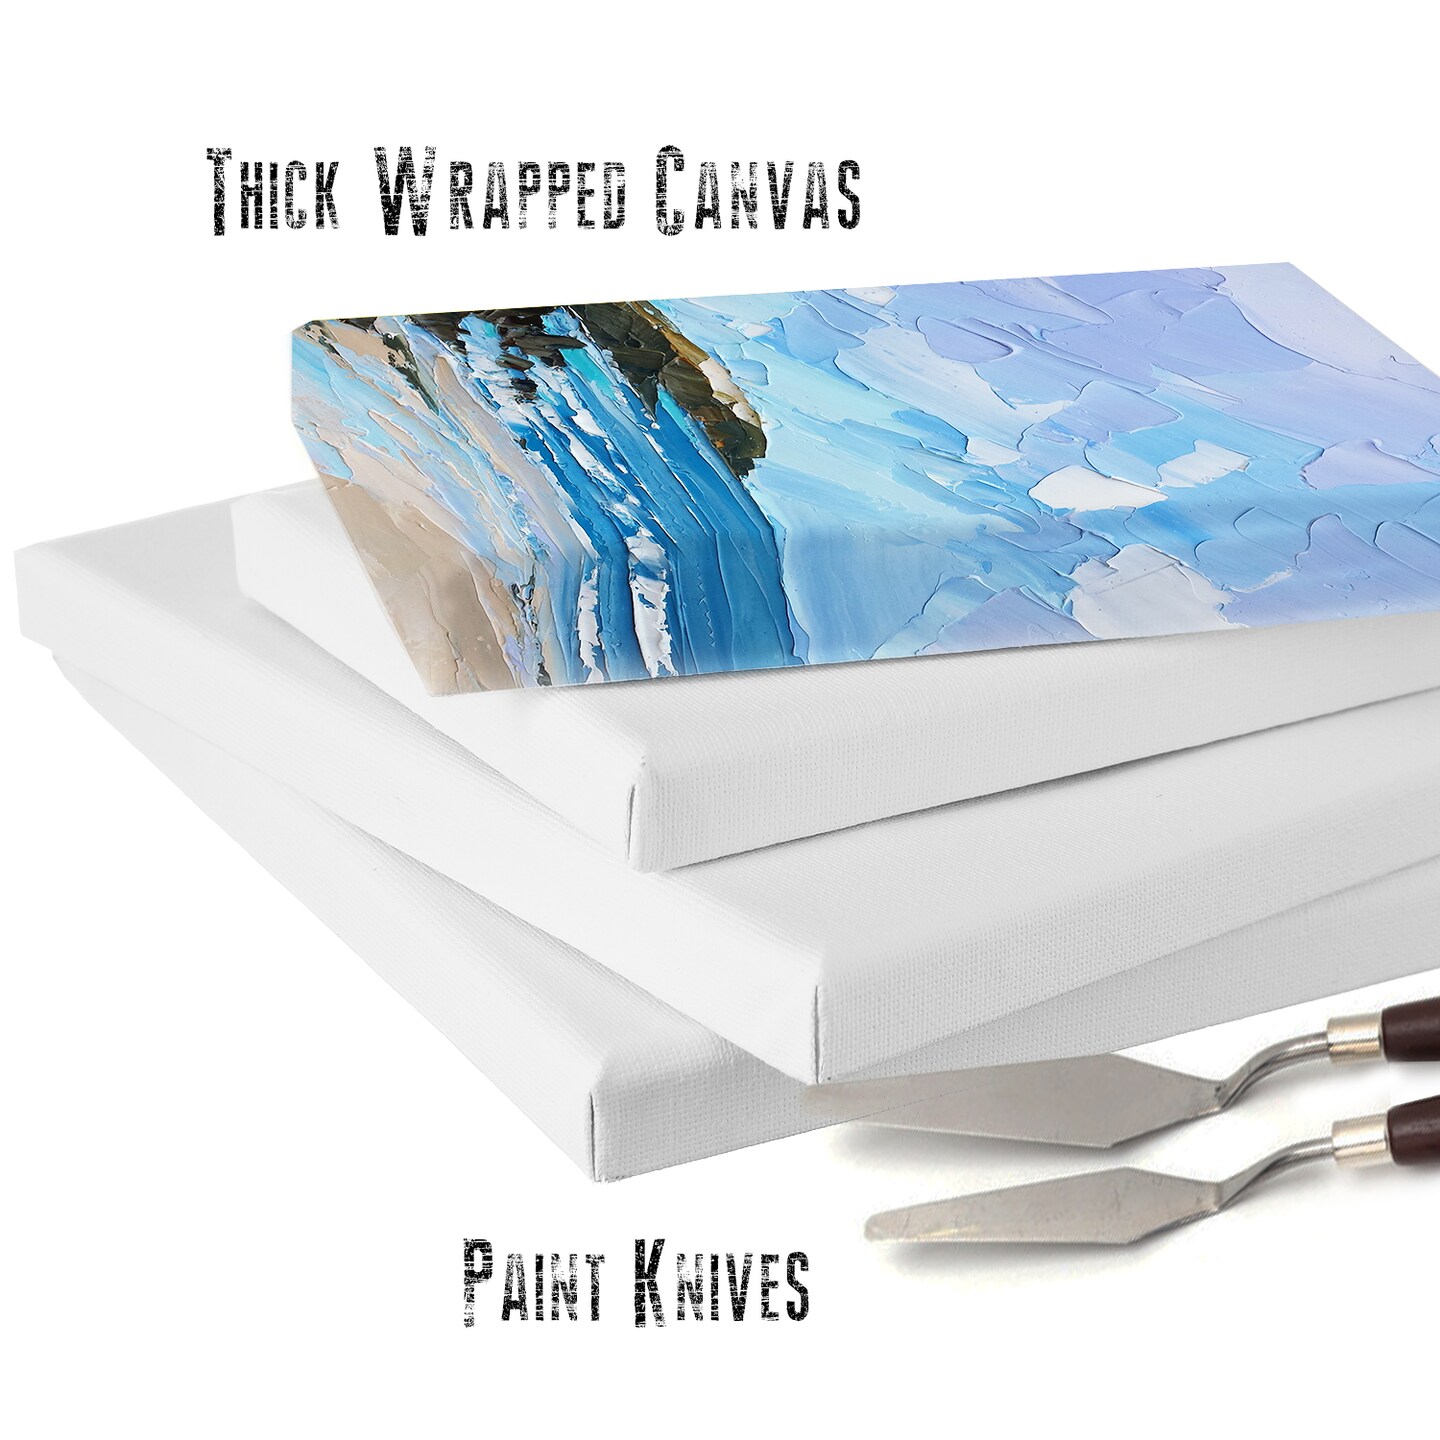 157 Pcs Mini Acrylic Paint Set,22 Sets Acrylic Paint Strips in 12 Colo –  WoodArtSupply